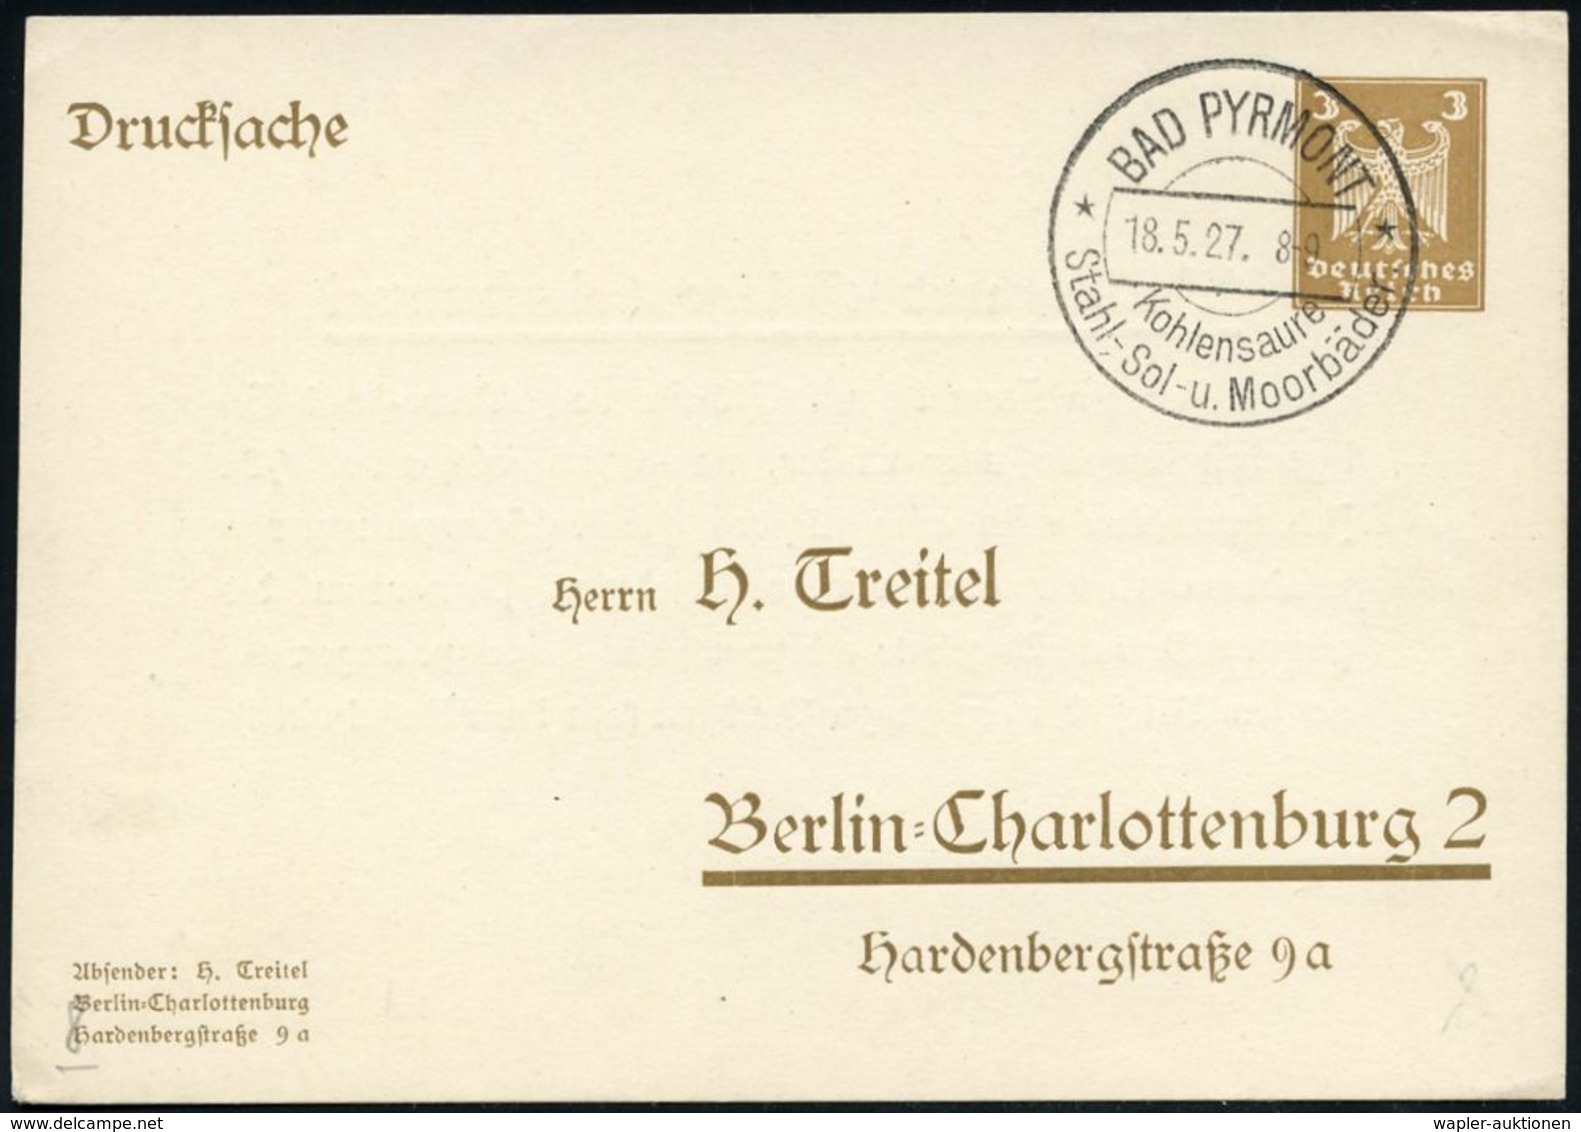 KURORTE / HEILQUELLEN : BAD PYRMONT/ Kohlensäure/ Stahl-,Sol-u.Moorbad 1927 (18.5.) HWSt Auf PP 3 Pf. Goethe (Georg Jaco - Medicina